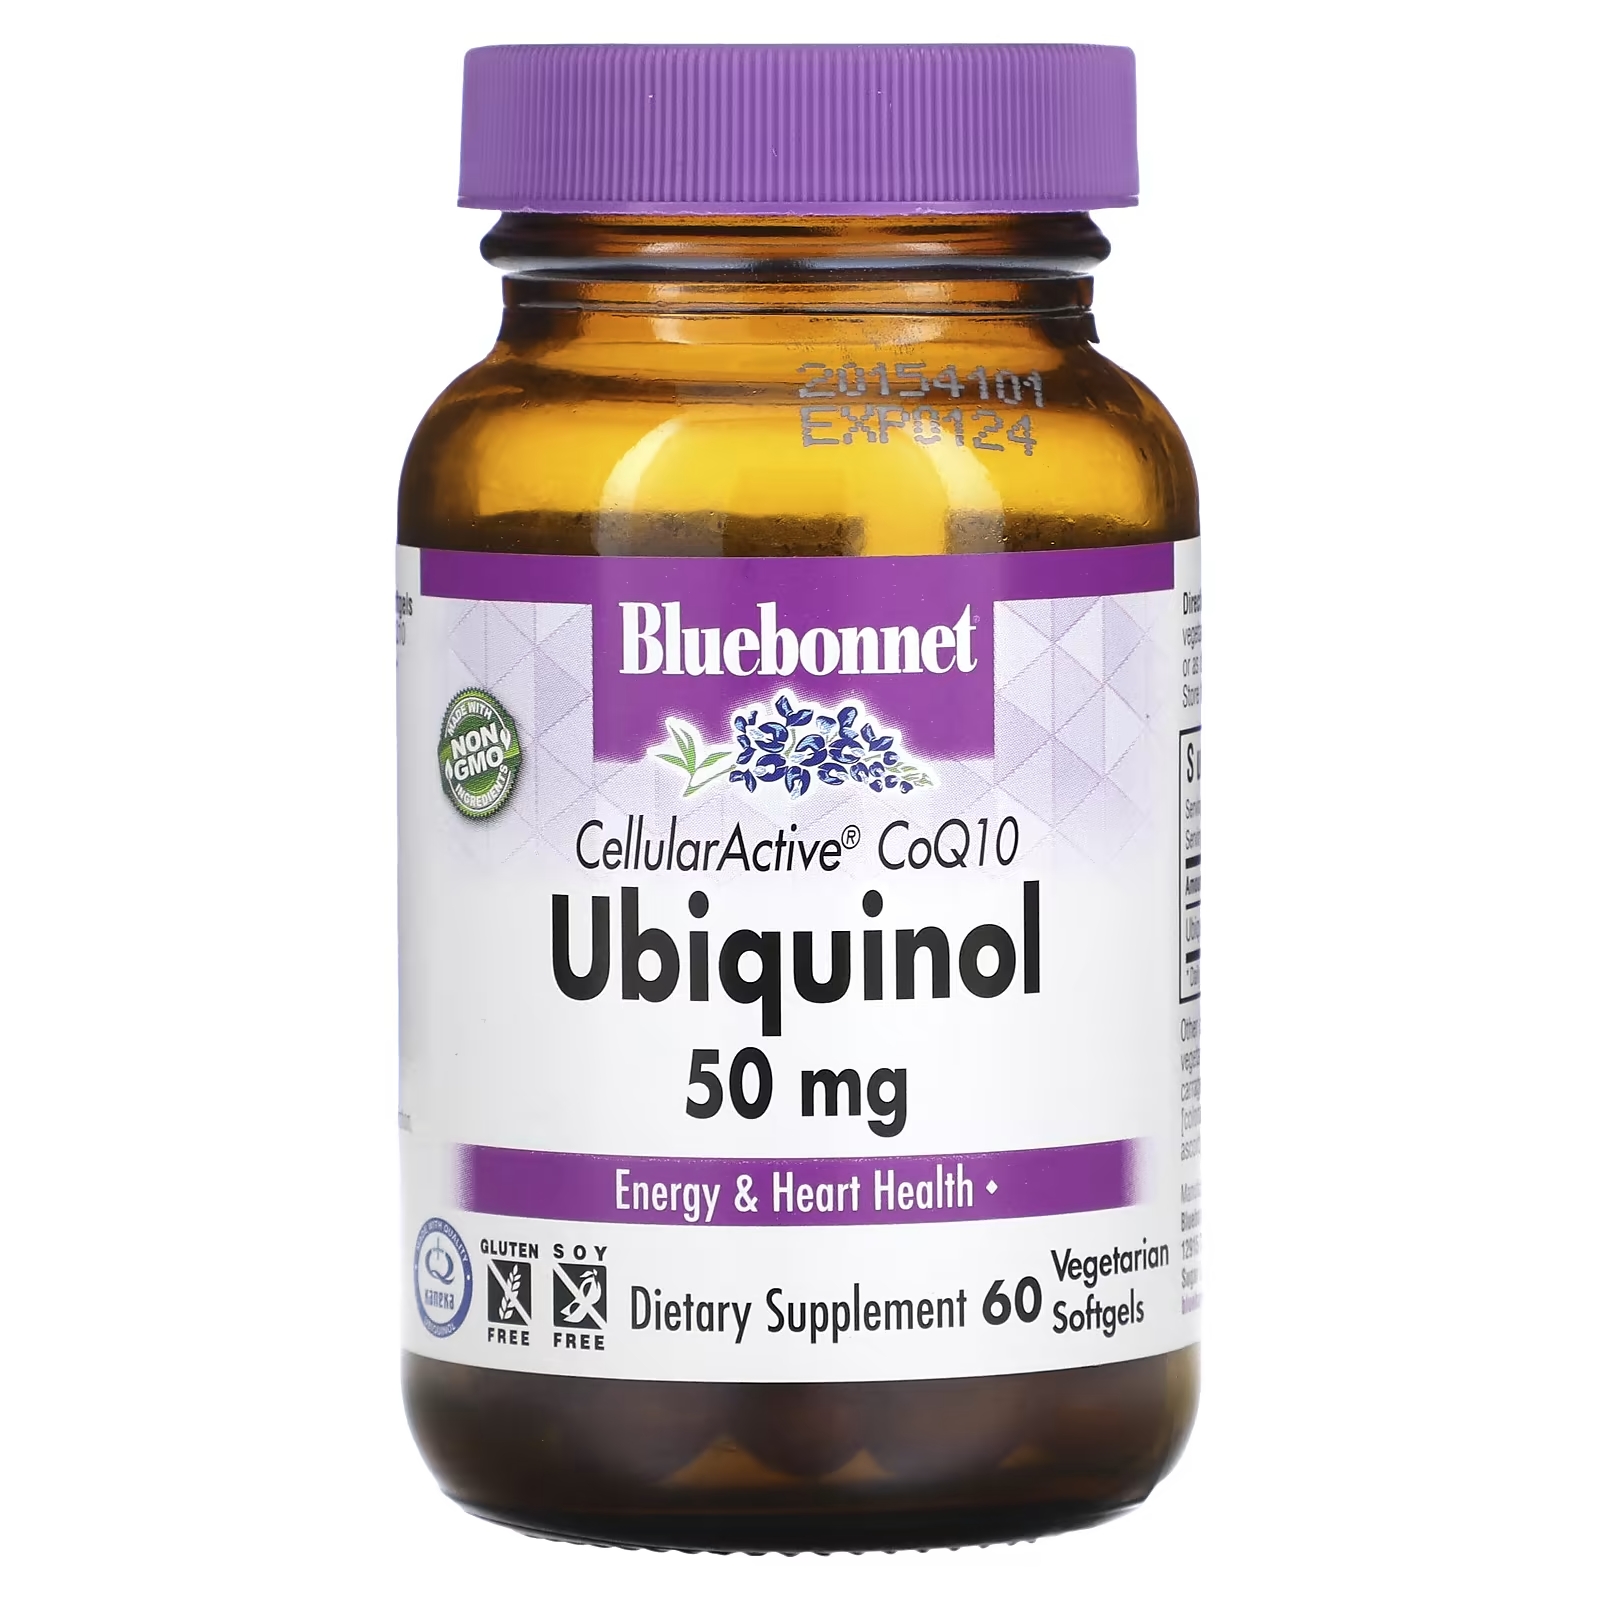 Bluebonnet Nutrition Ubiquinol Cellular Active CoQ10 50 мг, 60 растительных капсул coq10 убихинол cellularactive 100 мг 60 капсул bluebonnet nutrition